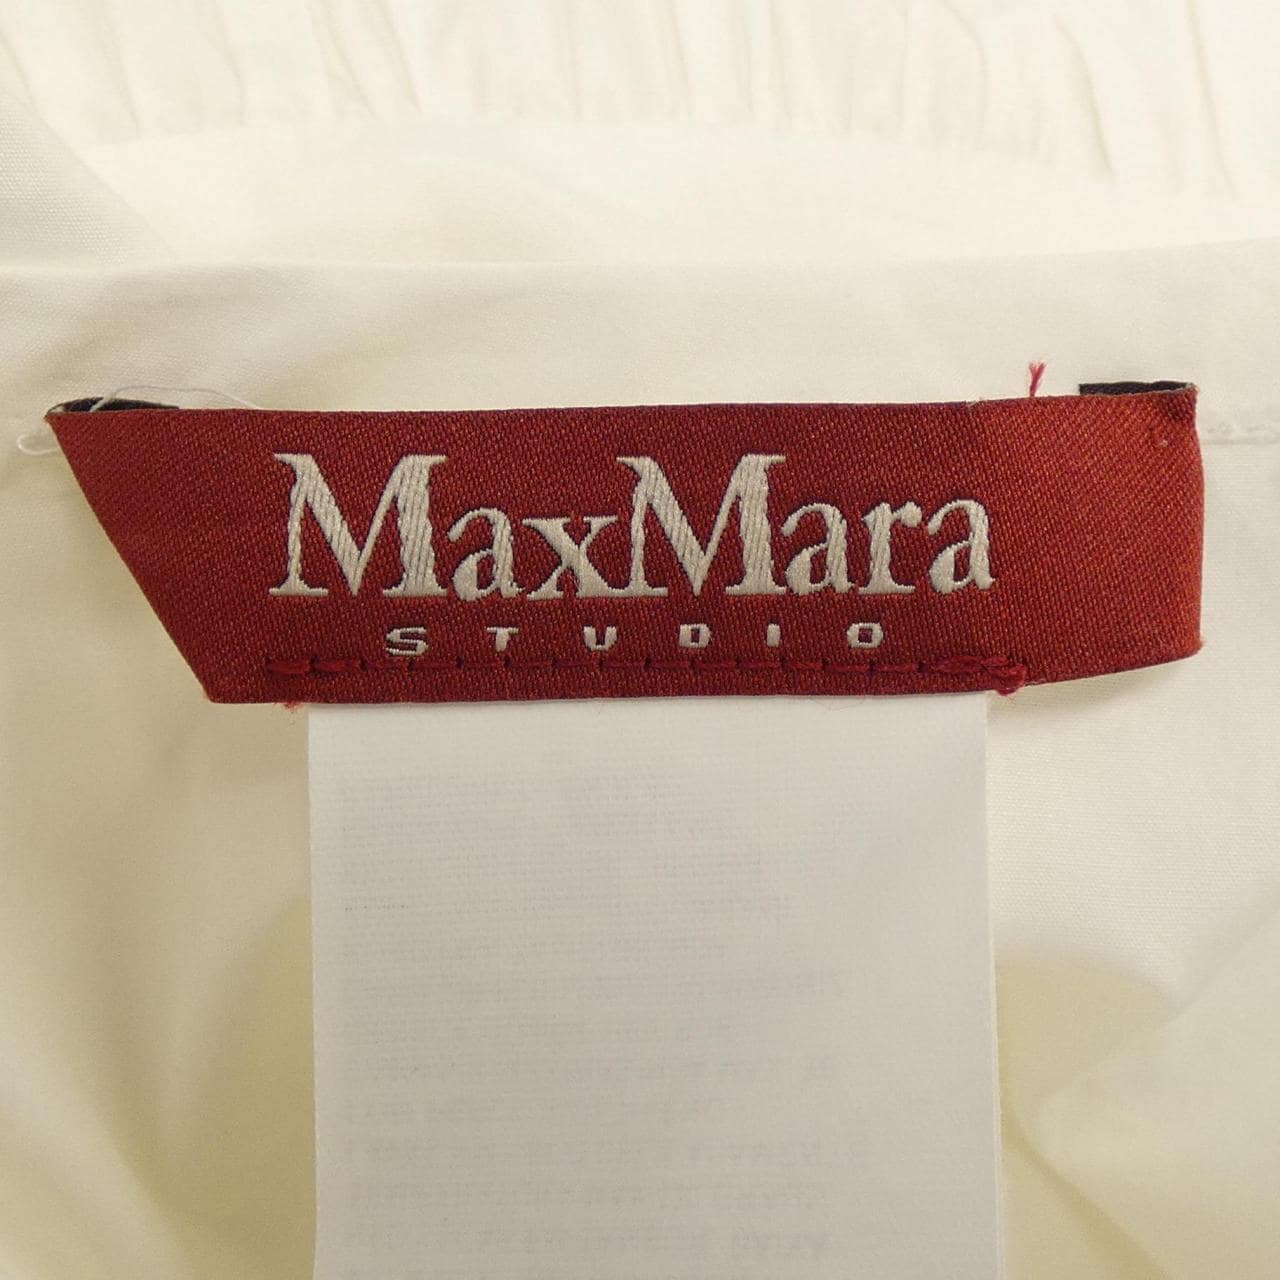 Max Mara STUDIO Mara STUDIO 一件